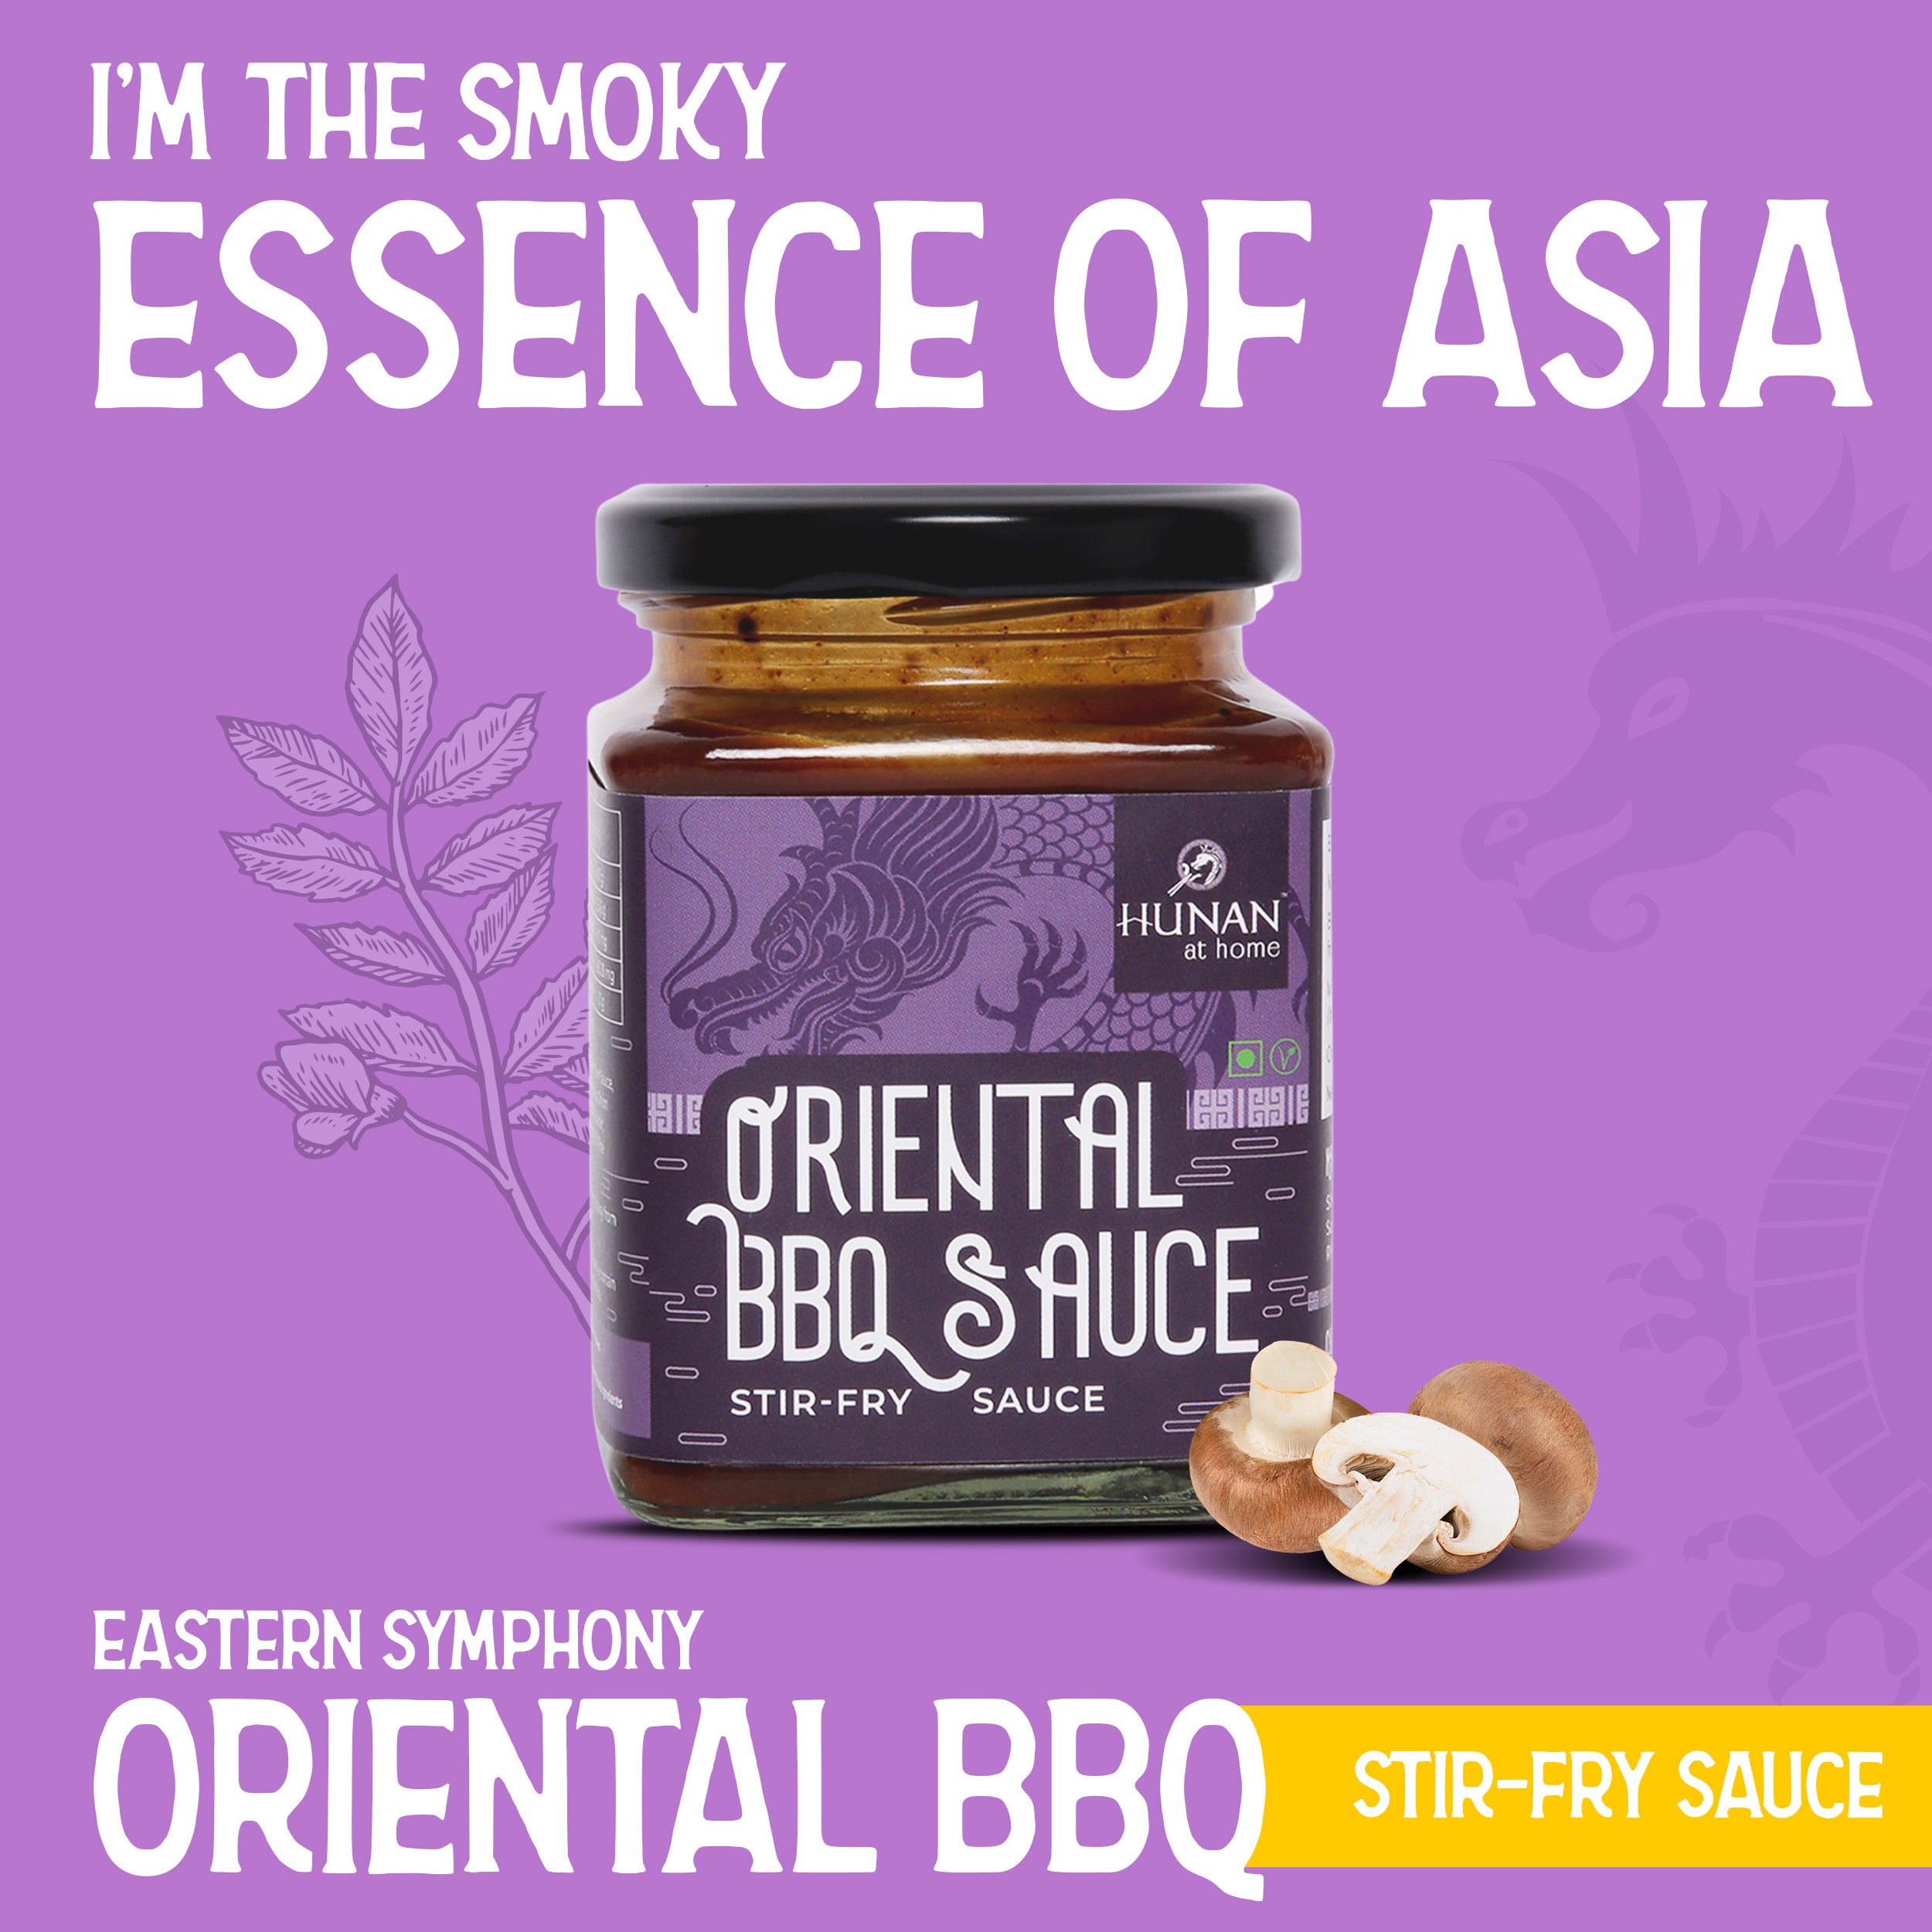 Eastern Symphony: Hunan's Oriental BBQ Sauce